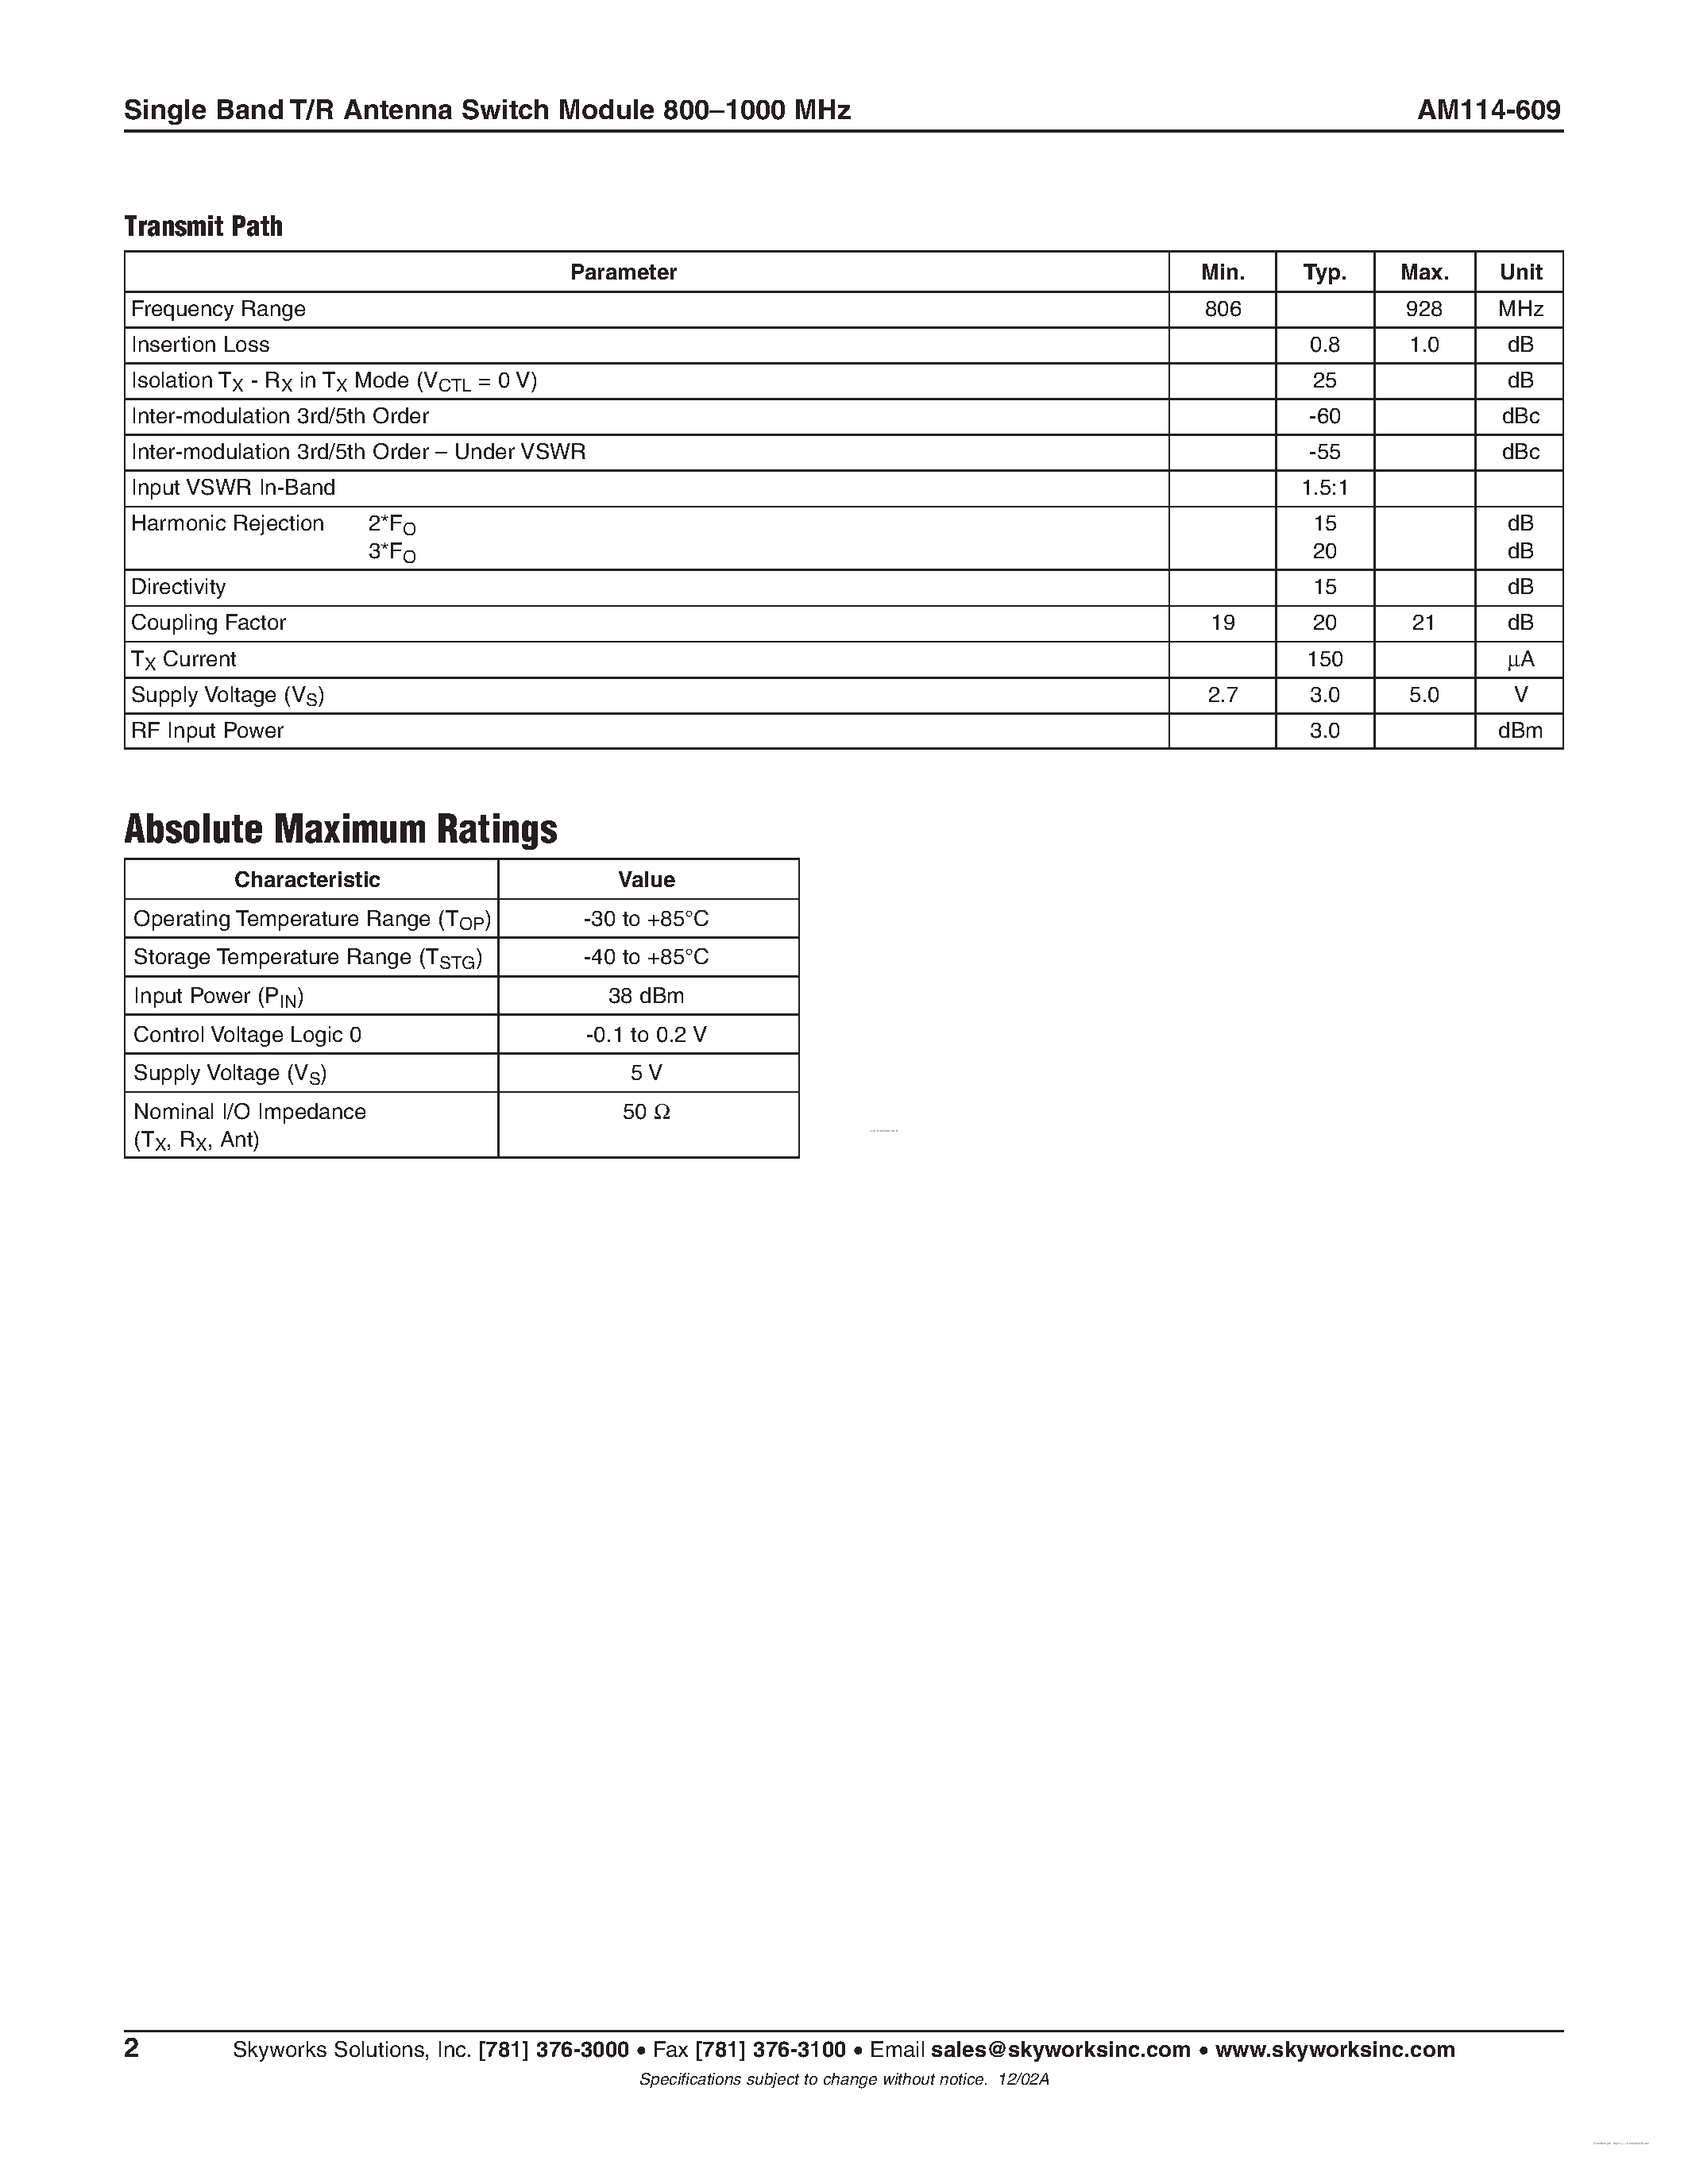 Datasheet AM114-609 - Single Band T/R Antenna page 2